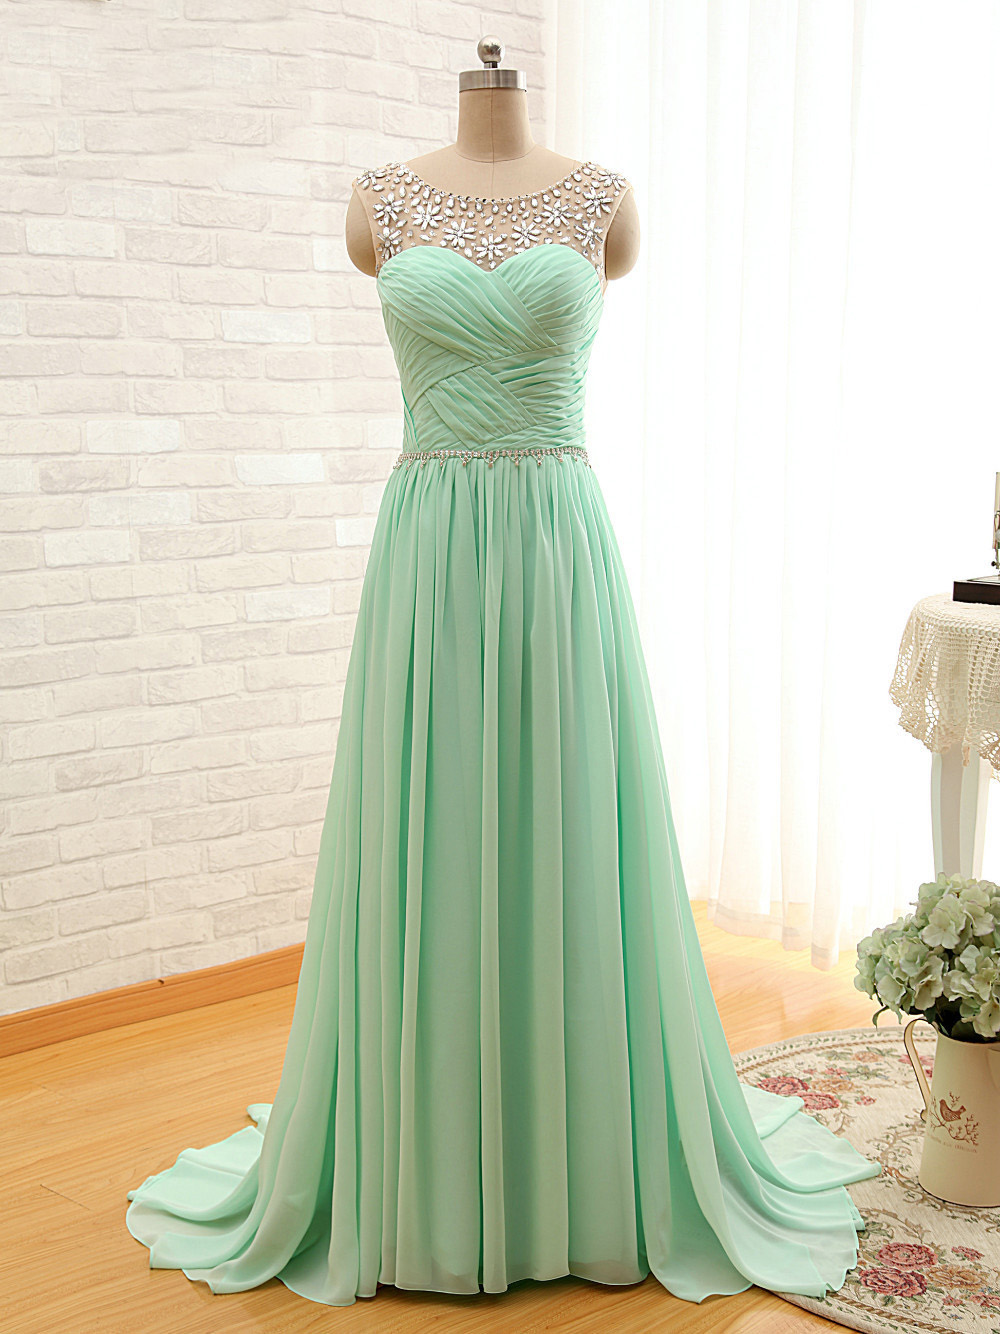 Charming Mint Green Evening Dresses 2020 A-Line / Princess Off-The-Shoulder  Beading Sequins Short Sleeve Backless Floor-Length / Long Formal Dresses